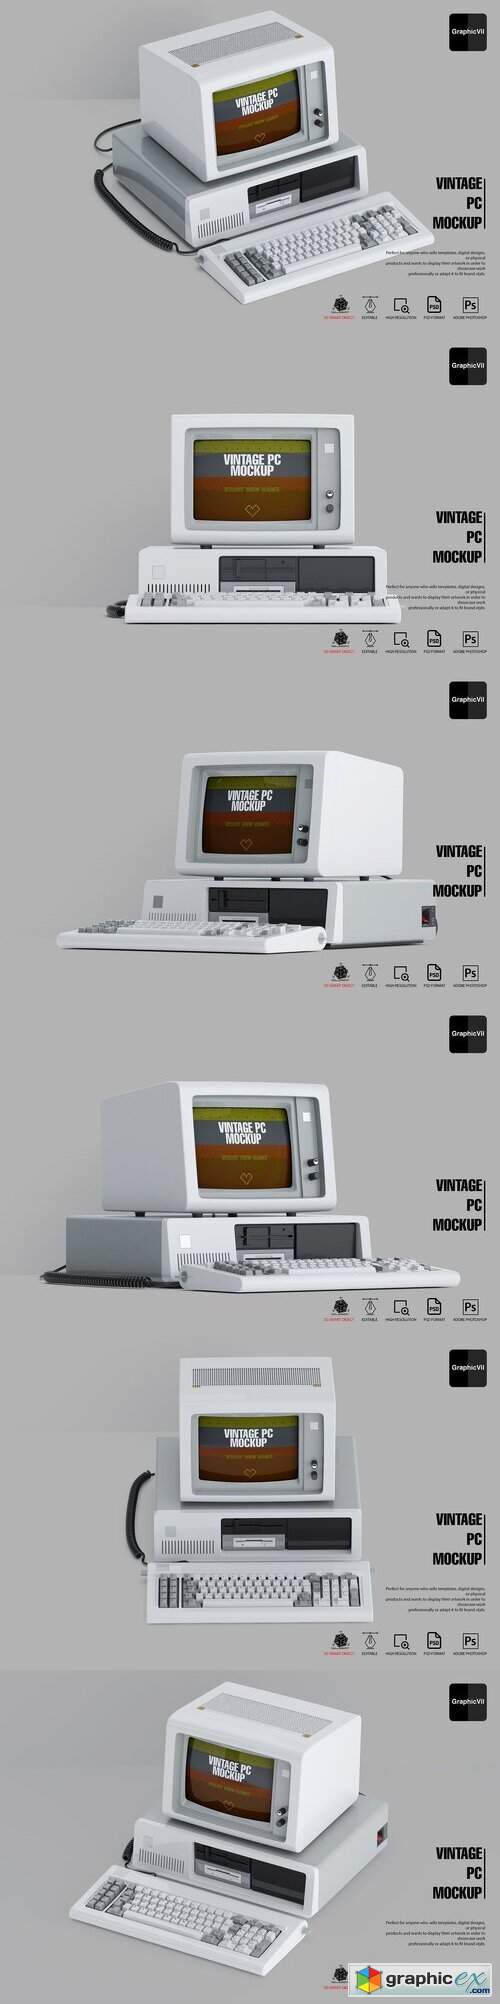 Vintage PC Mockup Part 2 IBM 5150 